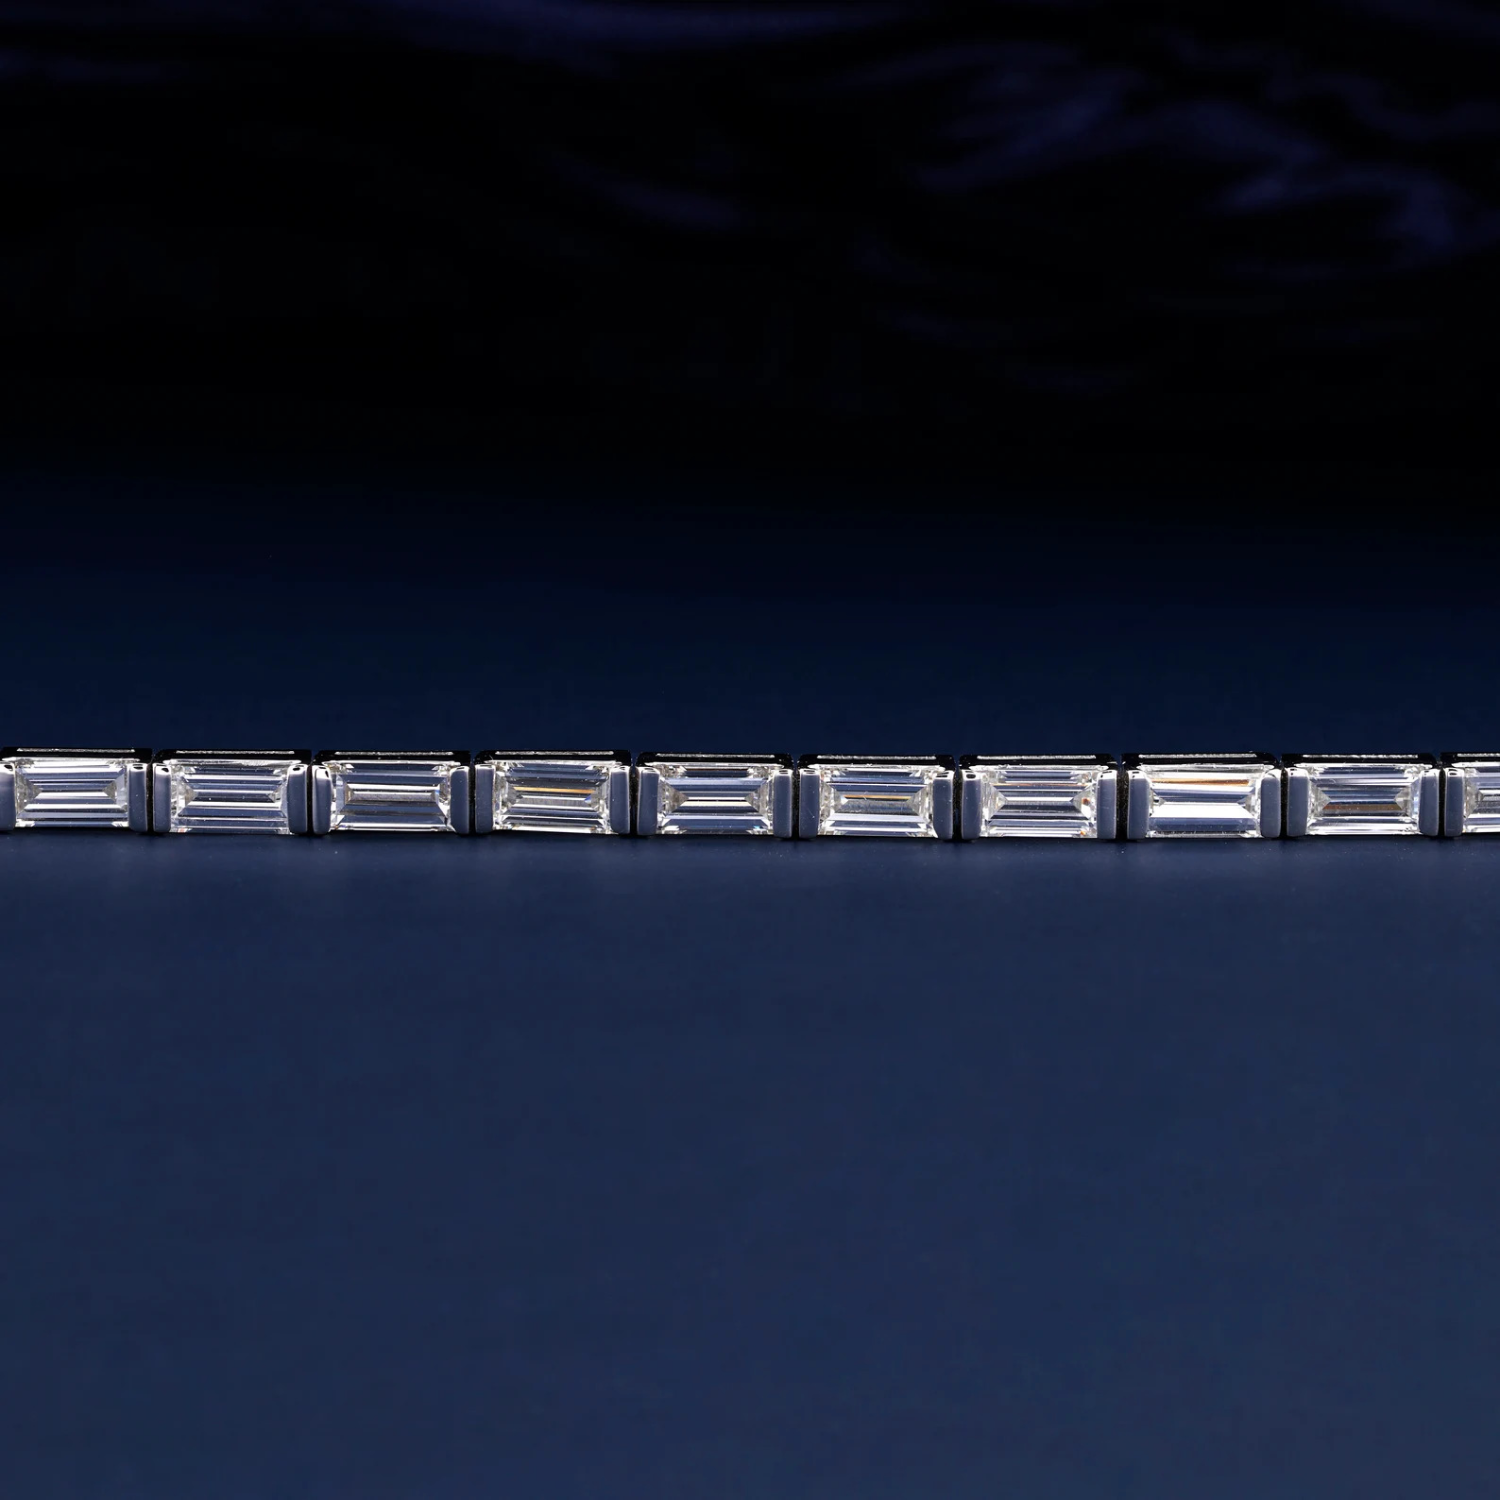 Baguette Cut Lab Grown Diamond Tennis Bracelet White Gold 24kdiamond